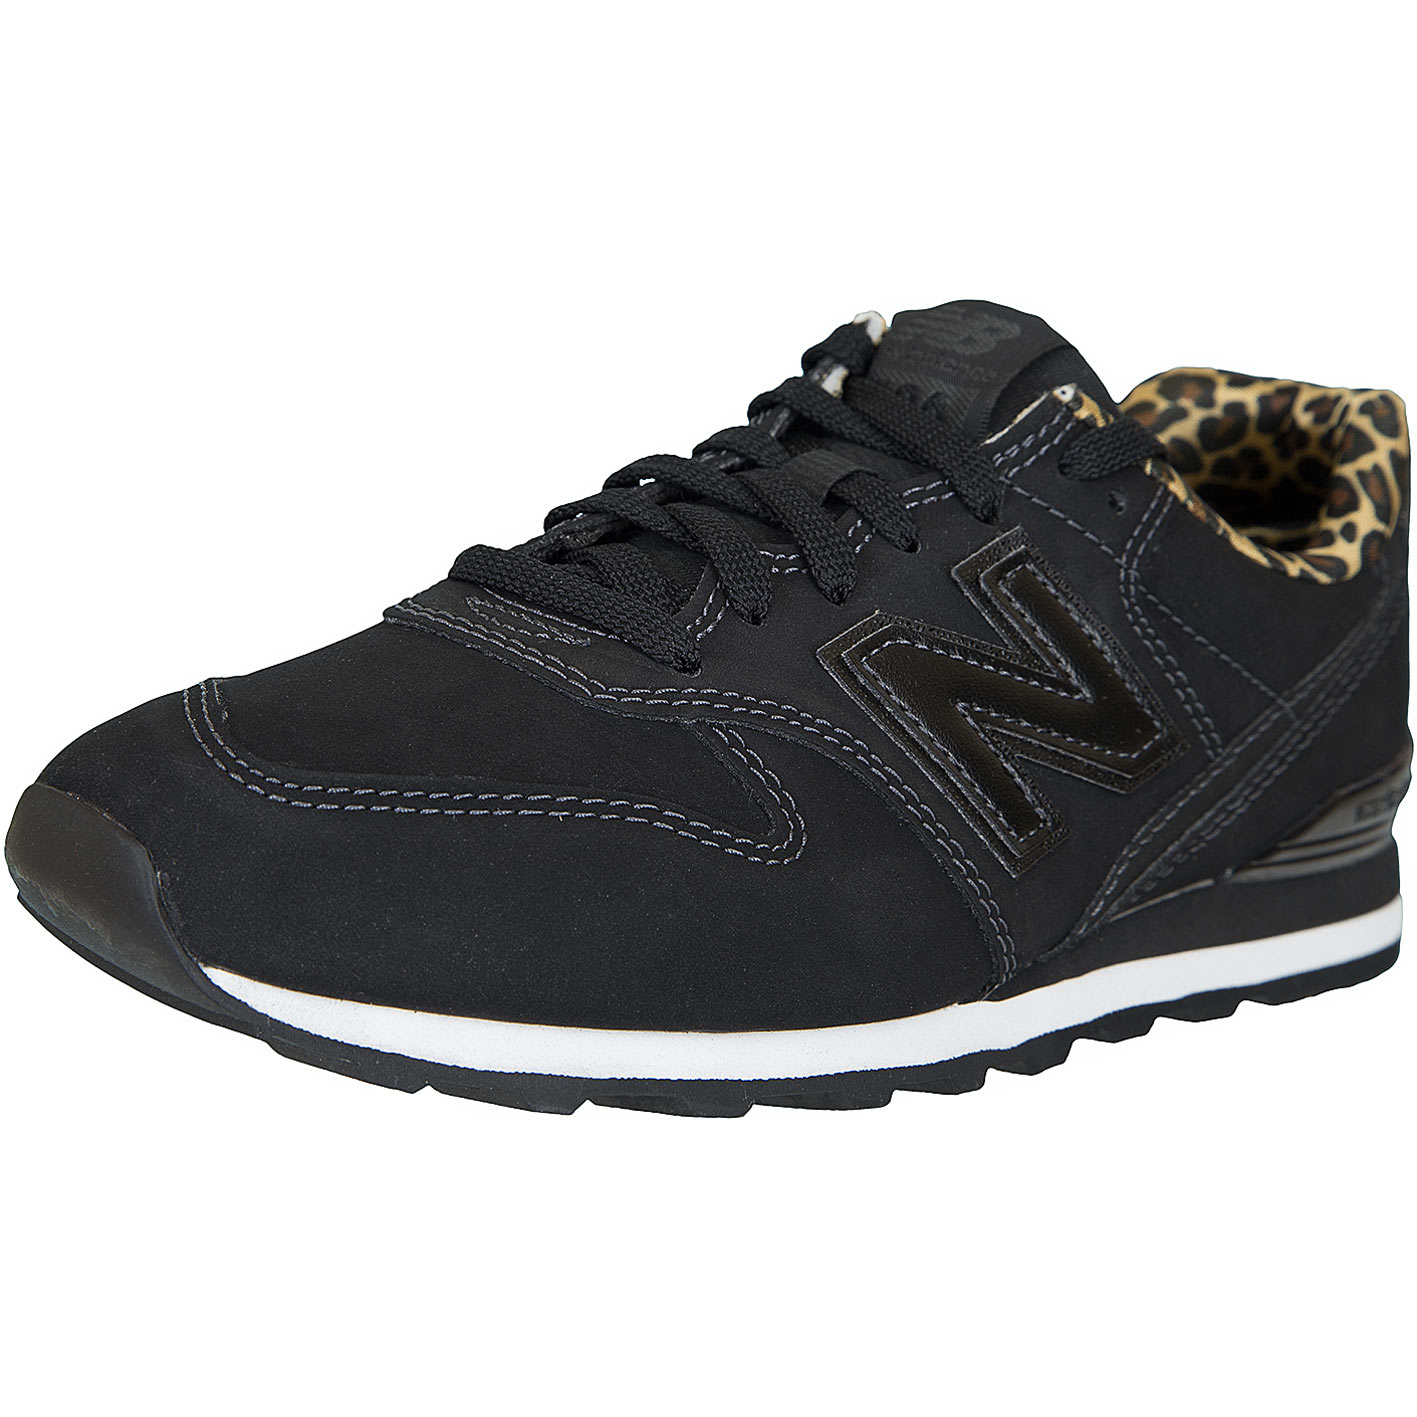 ☆ New Balance Damen Sneaker 996 schwarz - hier bestellen!